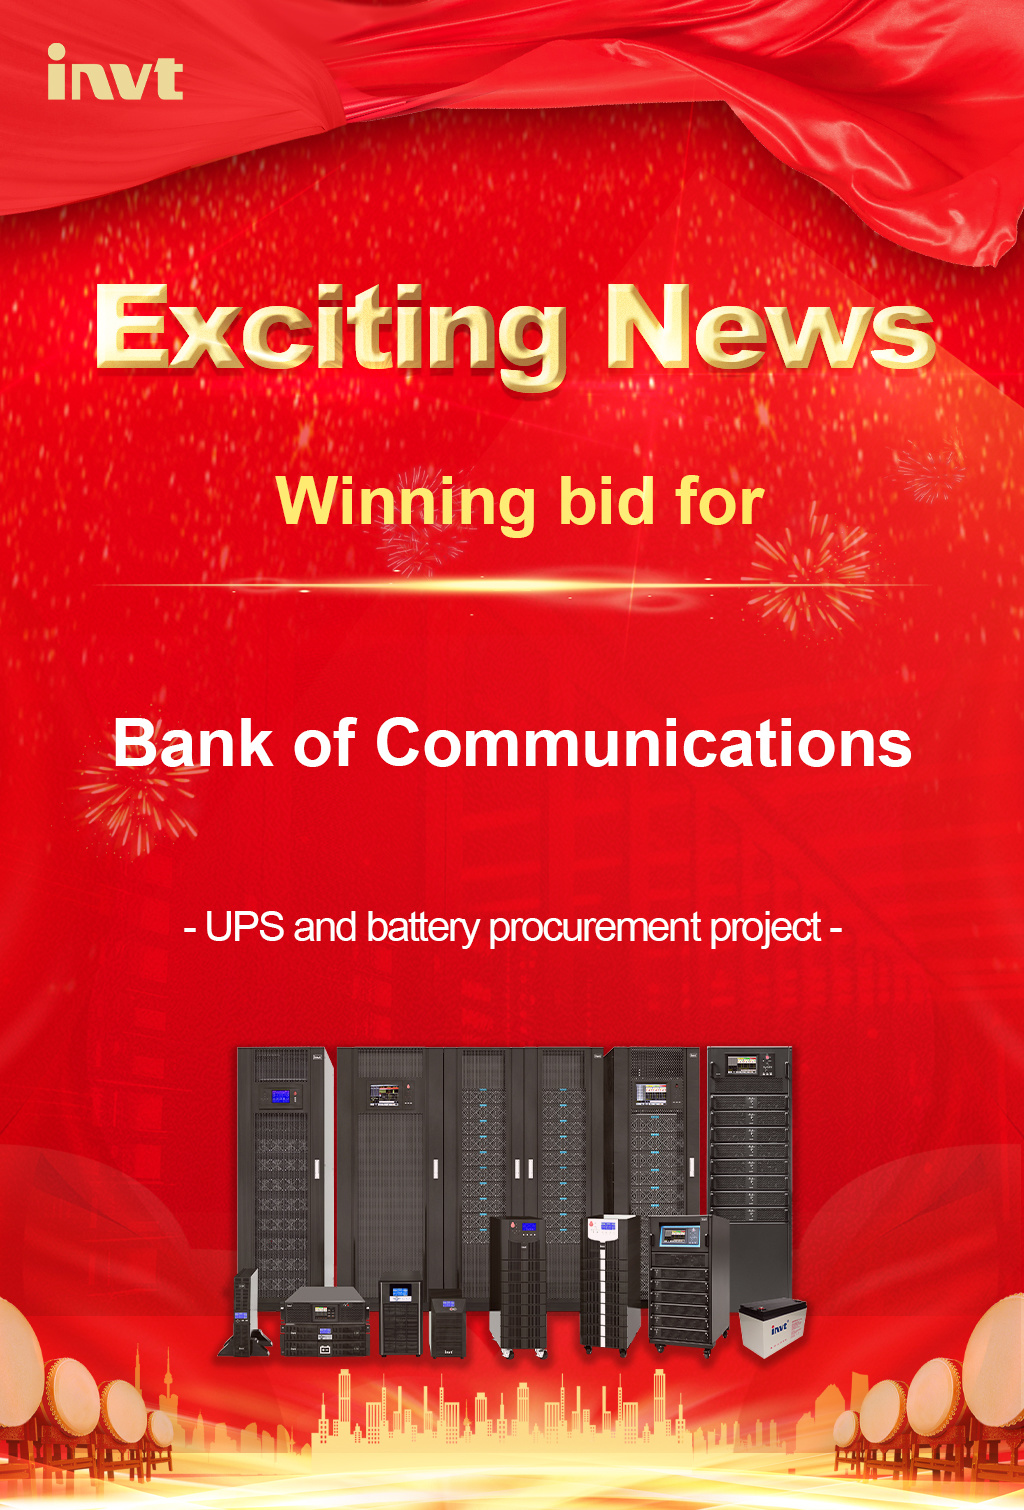 INVT Power won the bid for the BANK OF COMMUNICATIONS-INVT Power